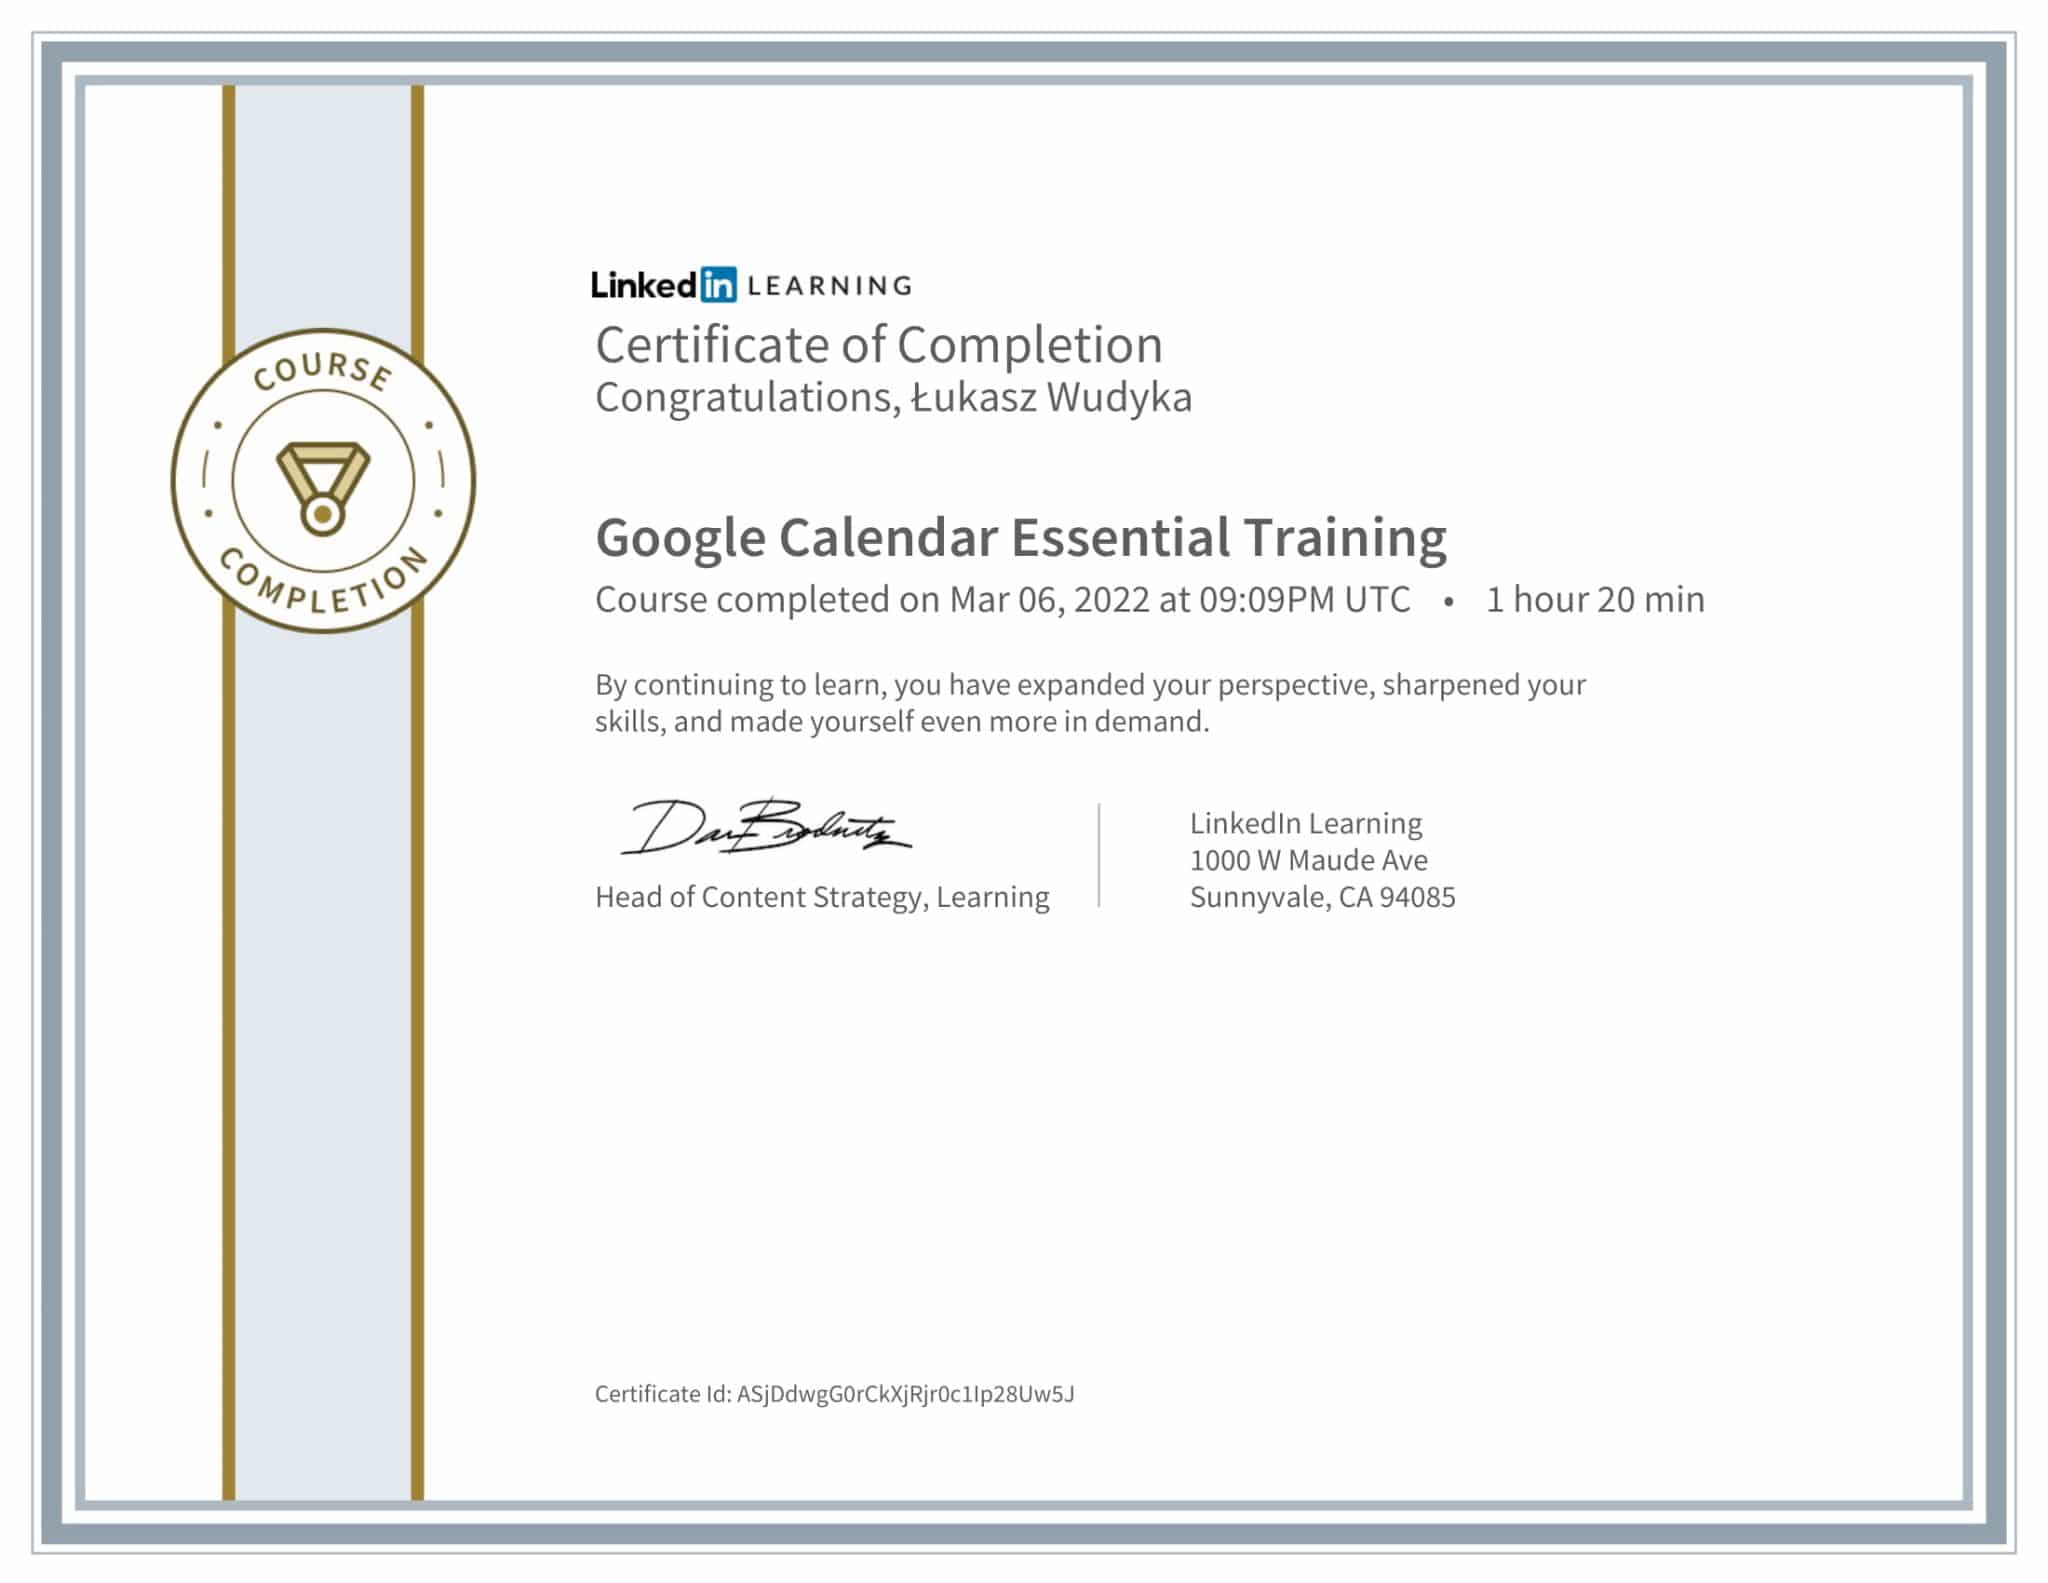 CertificateOfCompletion_Google Calendar Essential Training-1